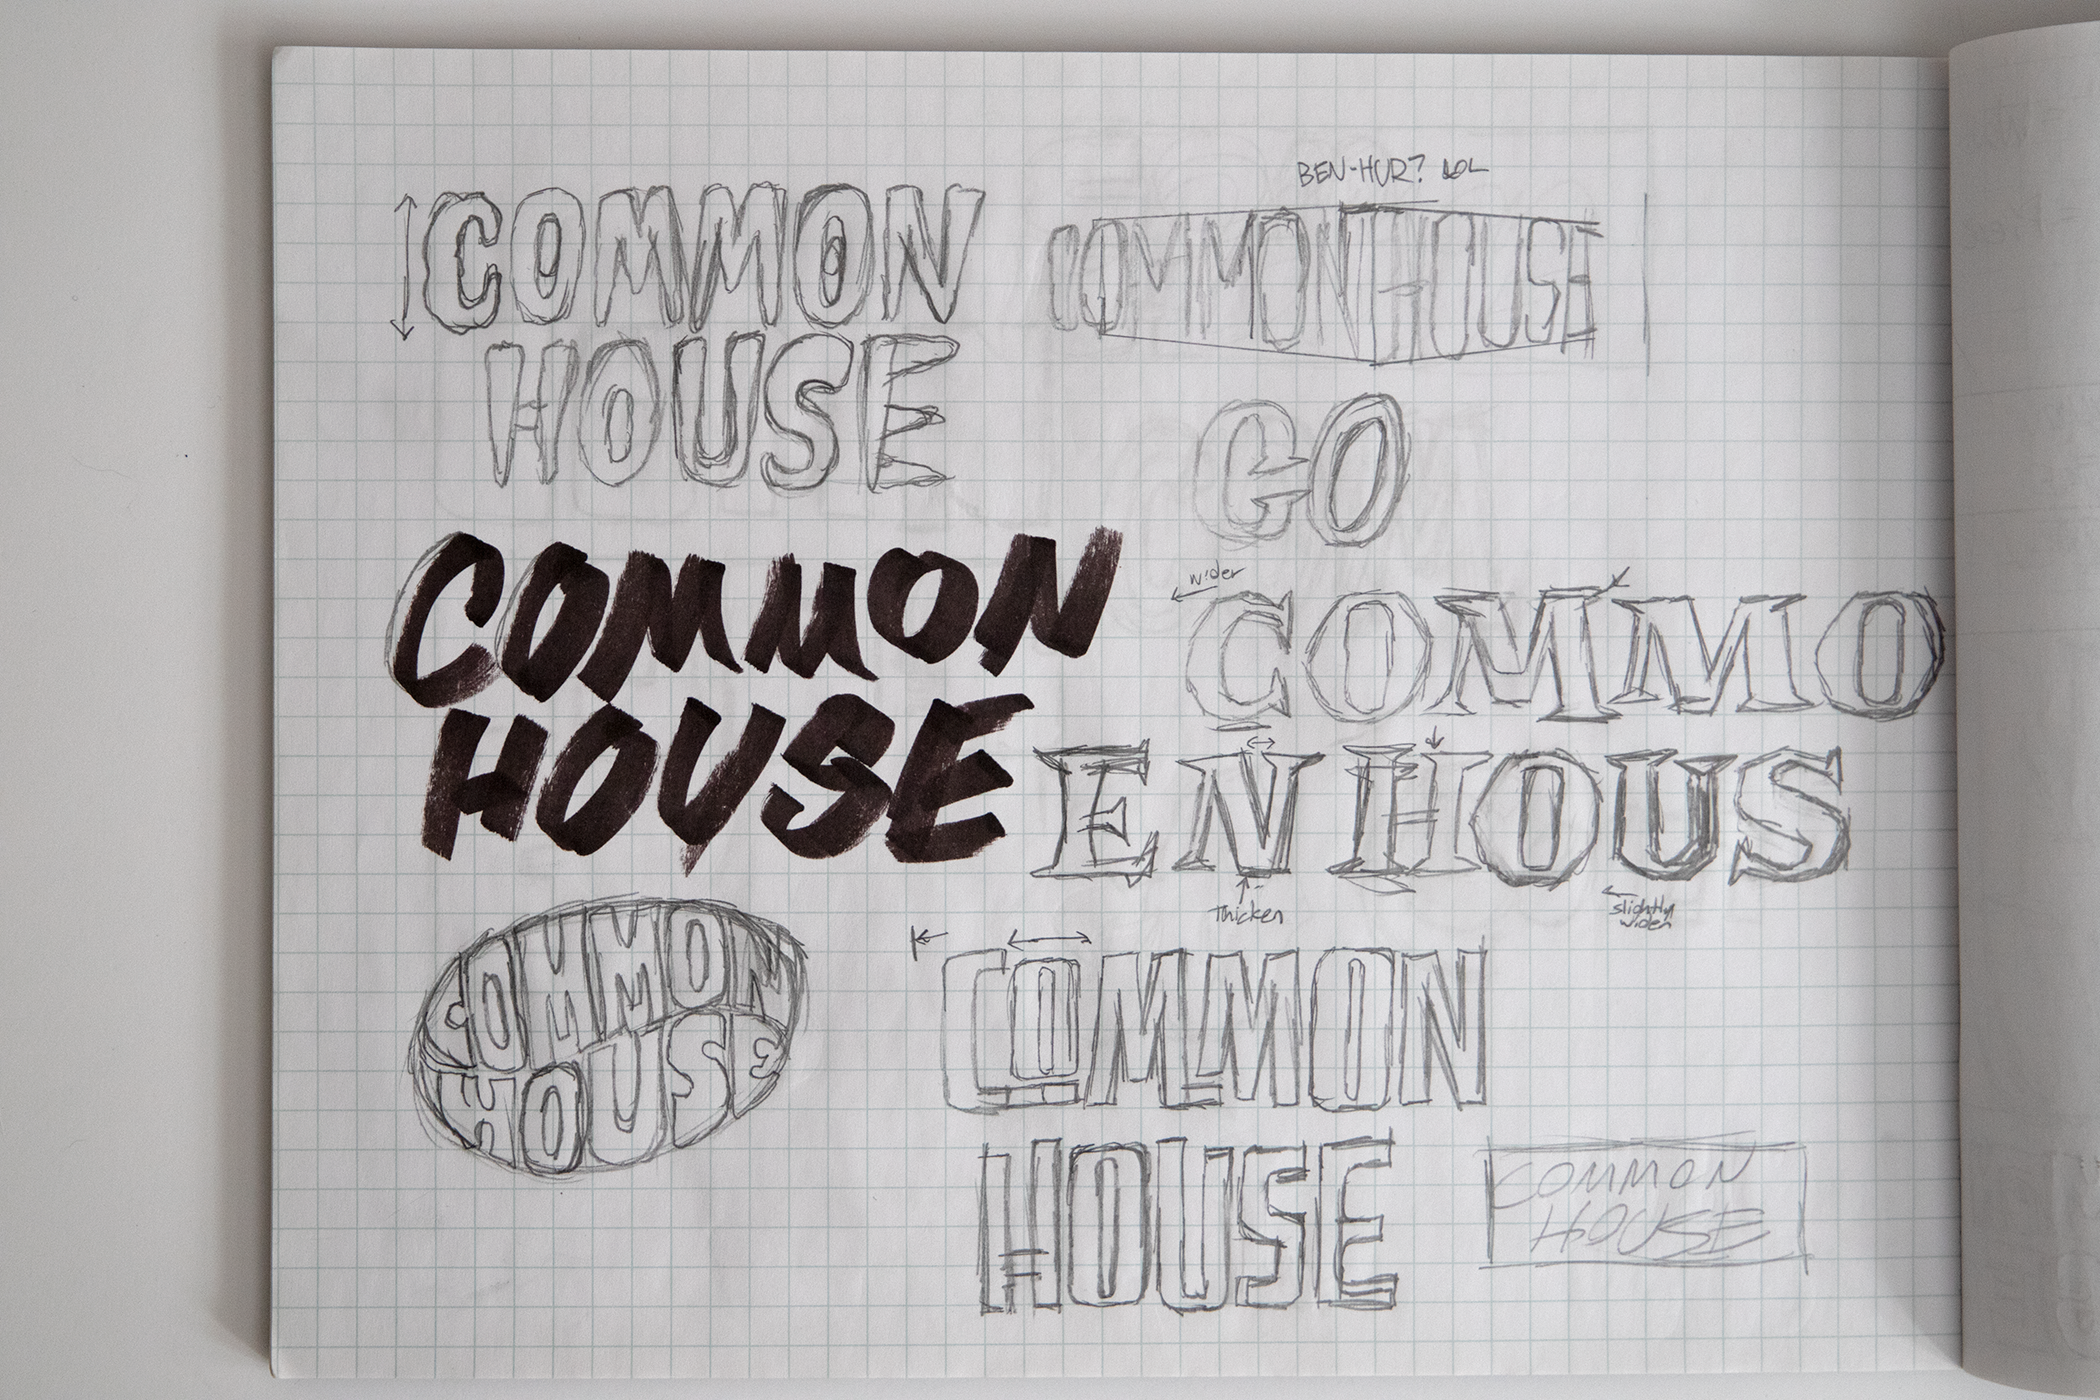 Common House progress sketches